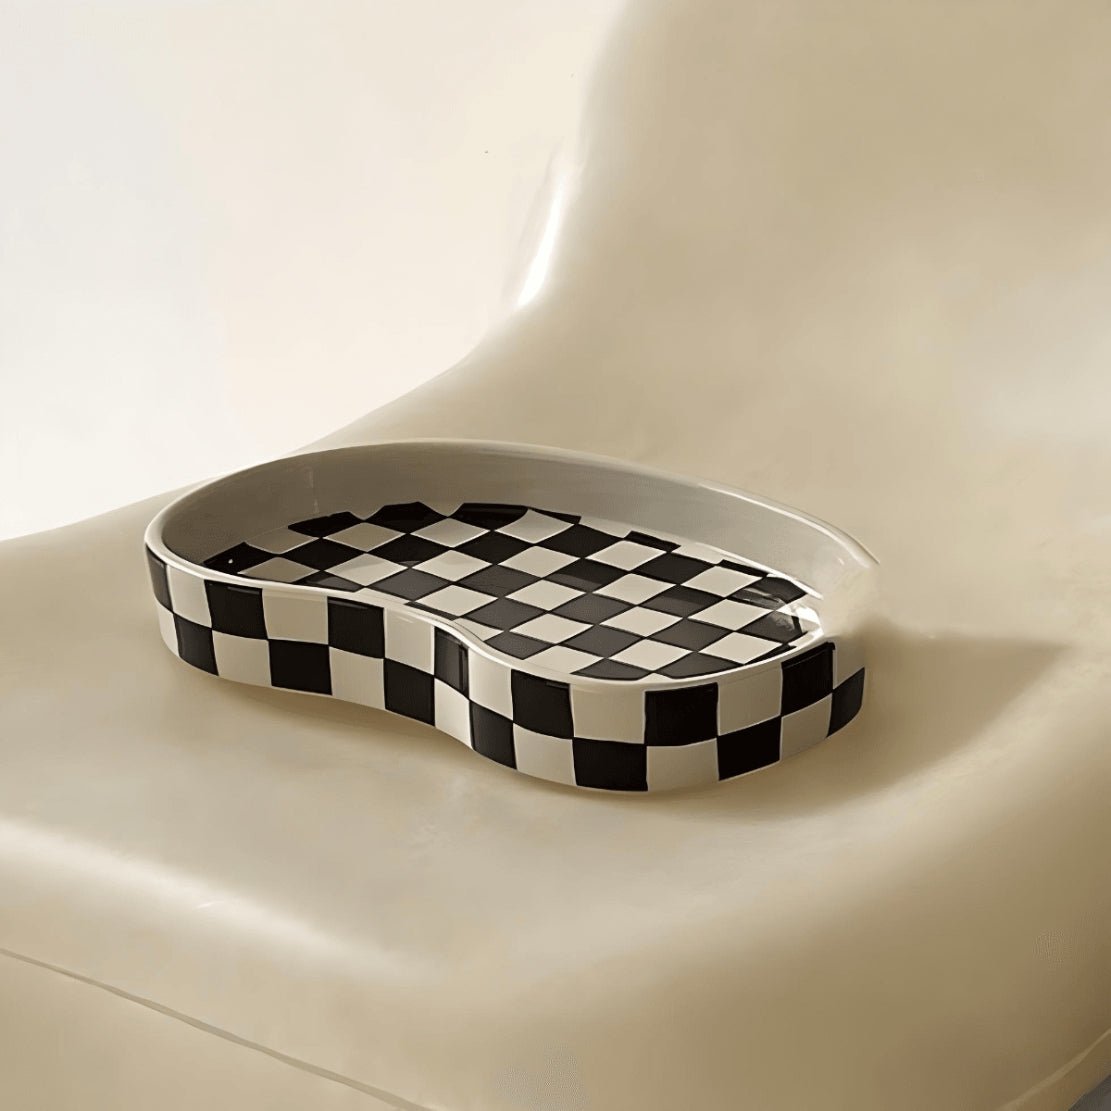 Black white checkerboard ceramic pond shaped plate